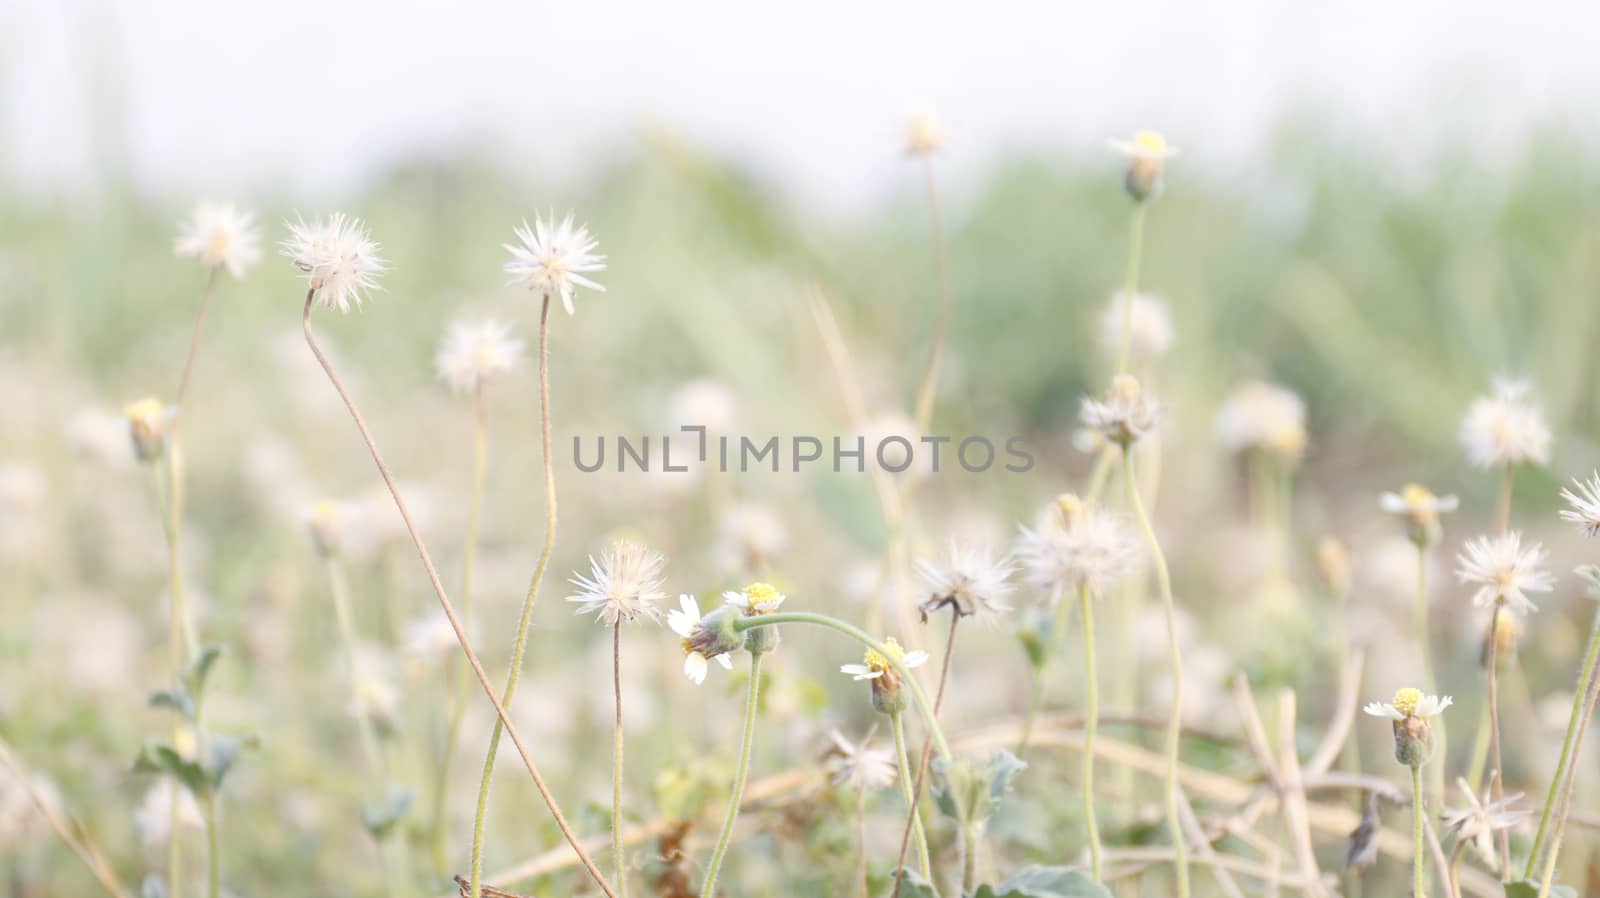 flower grass soft, flower grass in sunshine light morning day time, flower grass soft for background (selective focus)